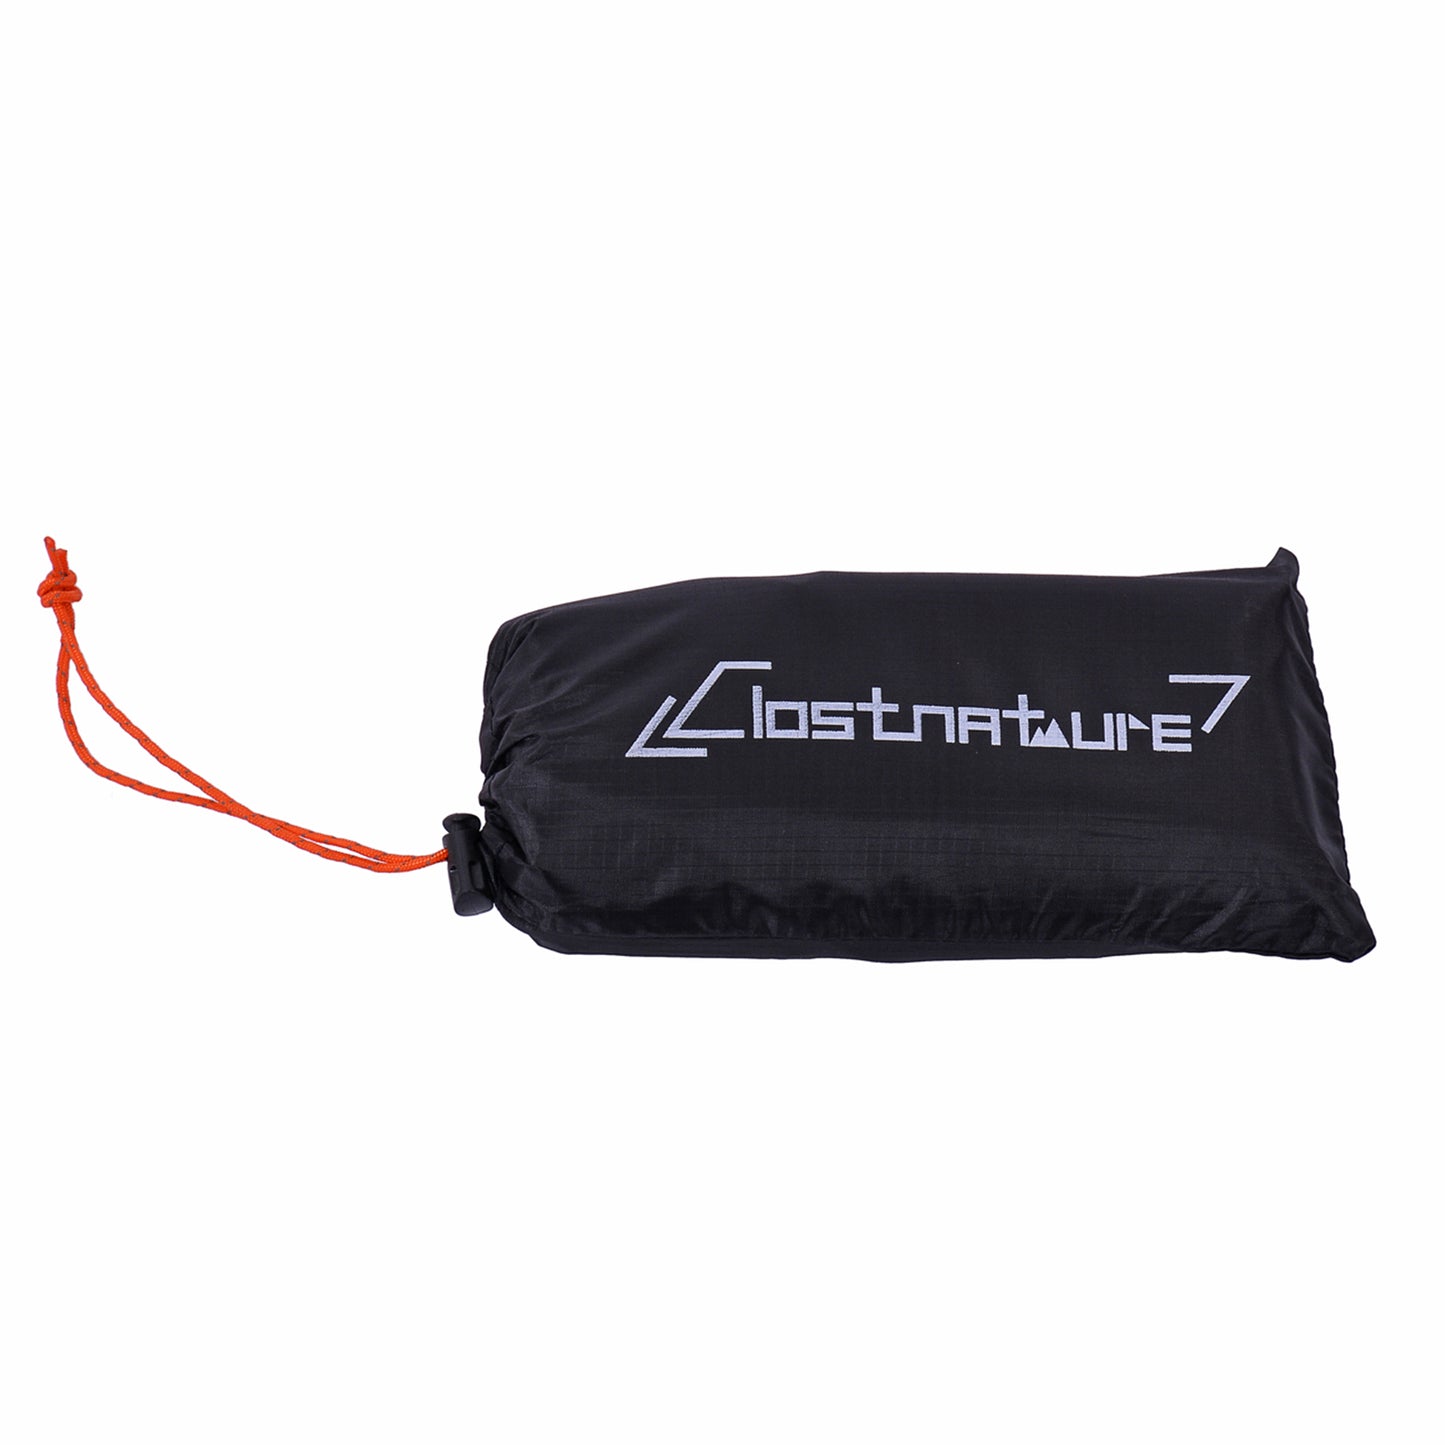 Clostnature 2-Person Tent Footprint - Waterproof Camping Tarp, Ultralight Ground Sheet Mat for Hiking, Backpacking, Hammock, Beach - Storage Bag Included